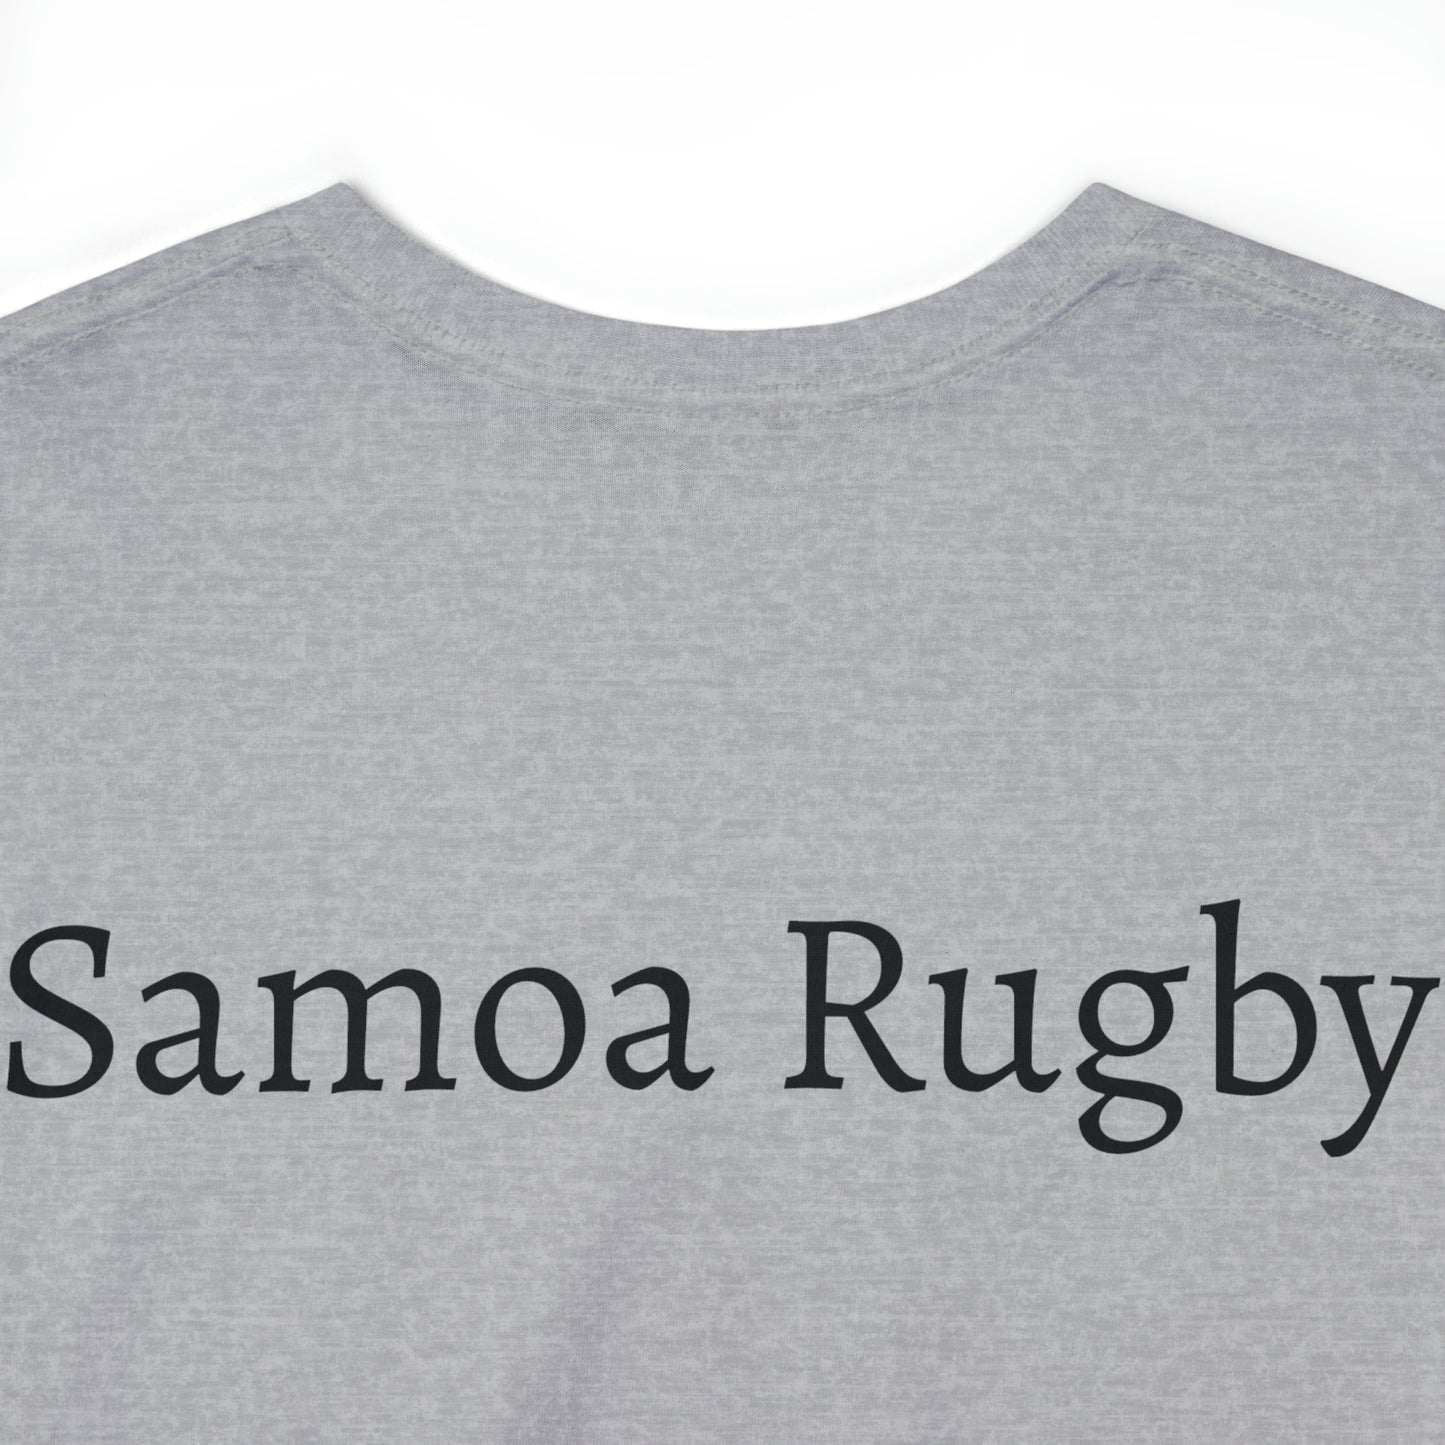 Ready Samoa - light shirt